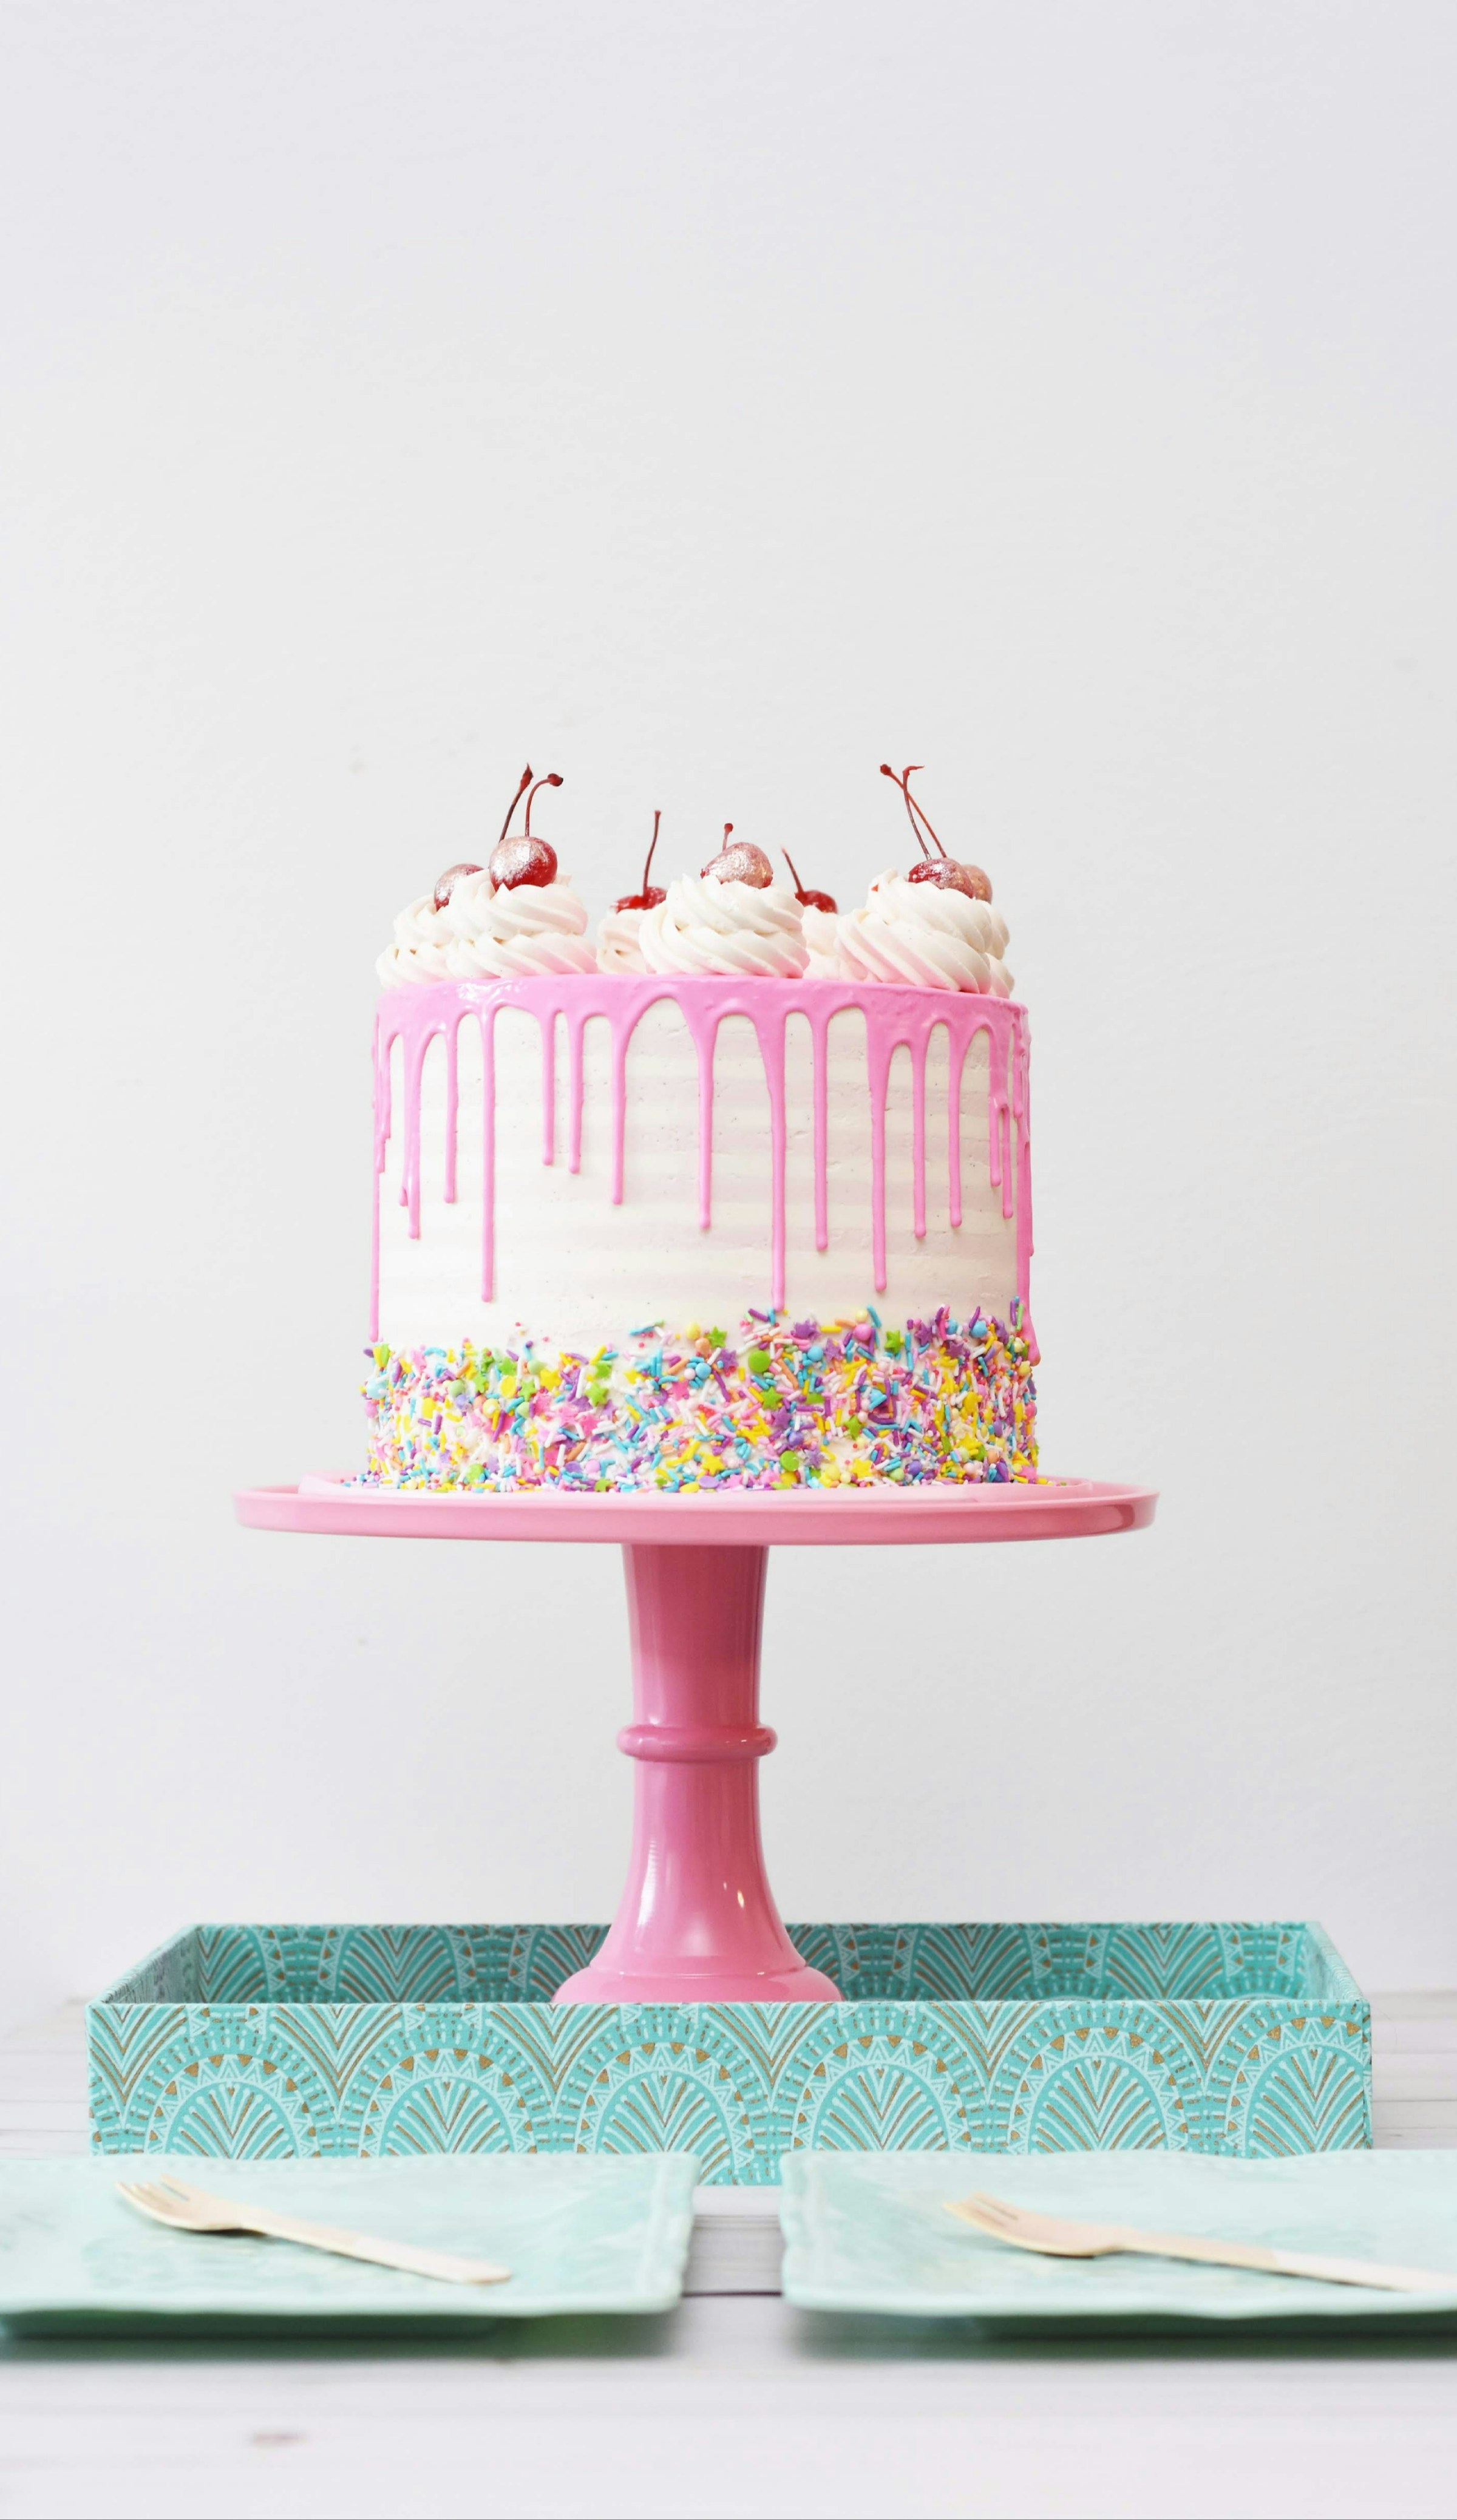 A fondant cake on a stand | Source: Unsplash